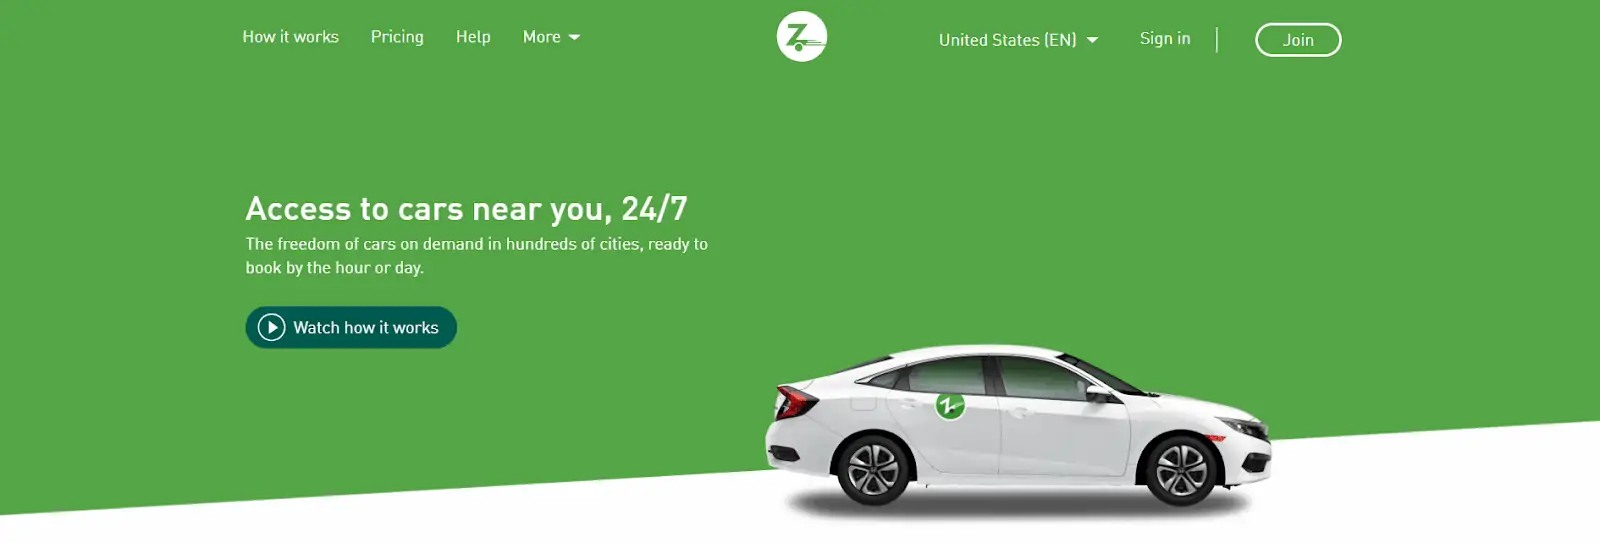 Car share: The Zipcar homepage 